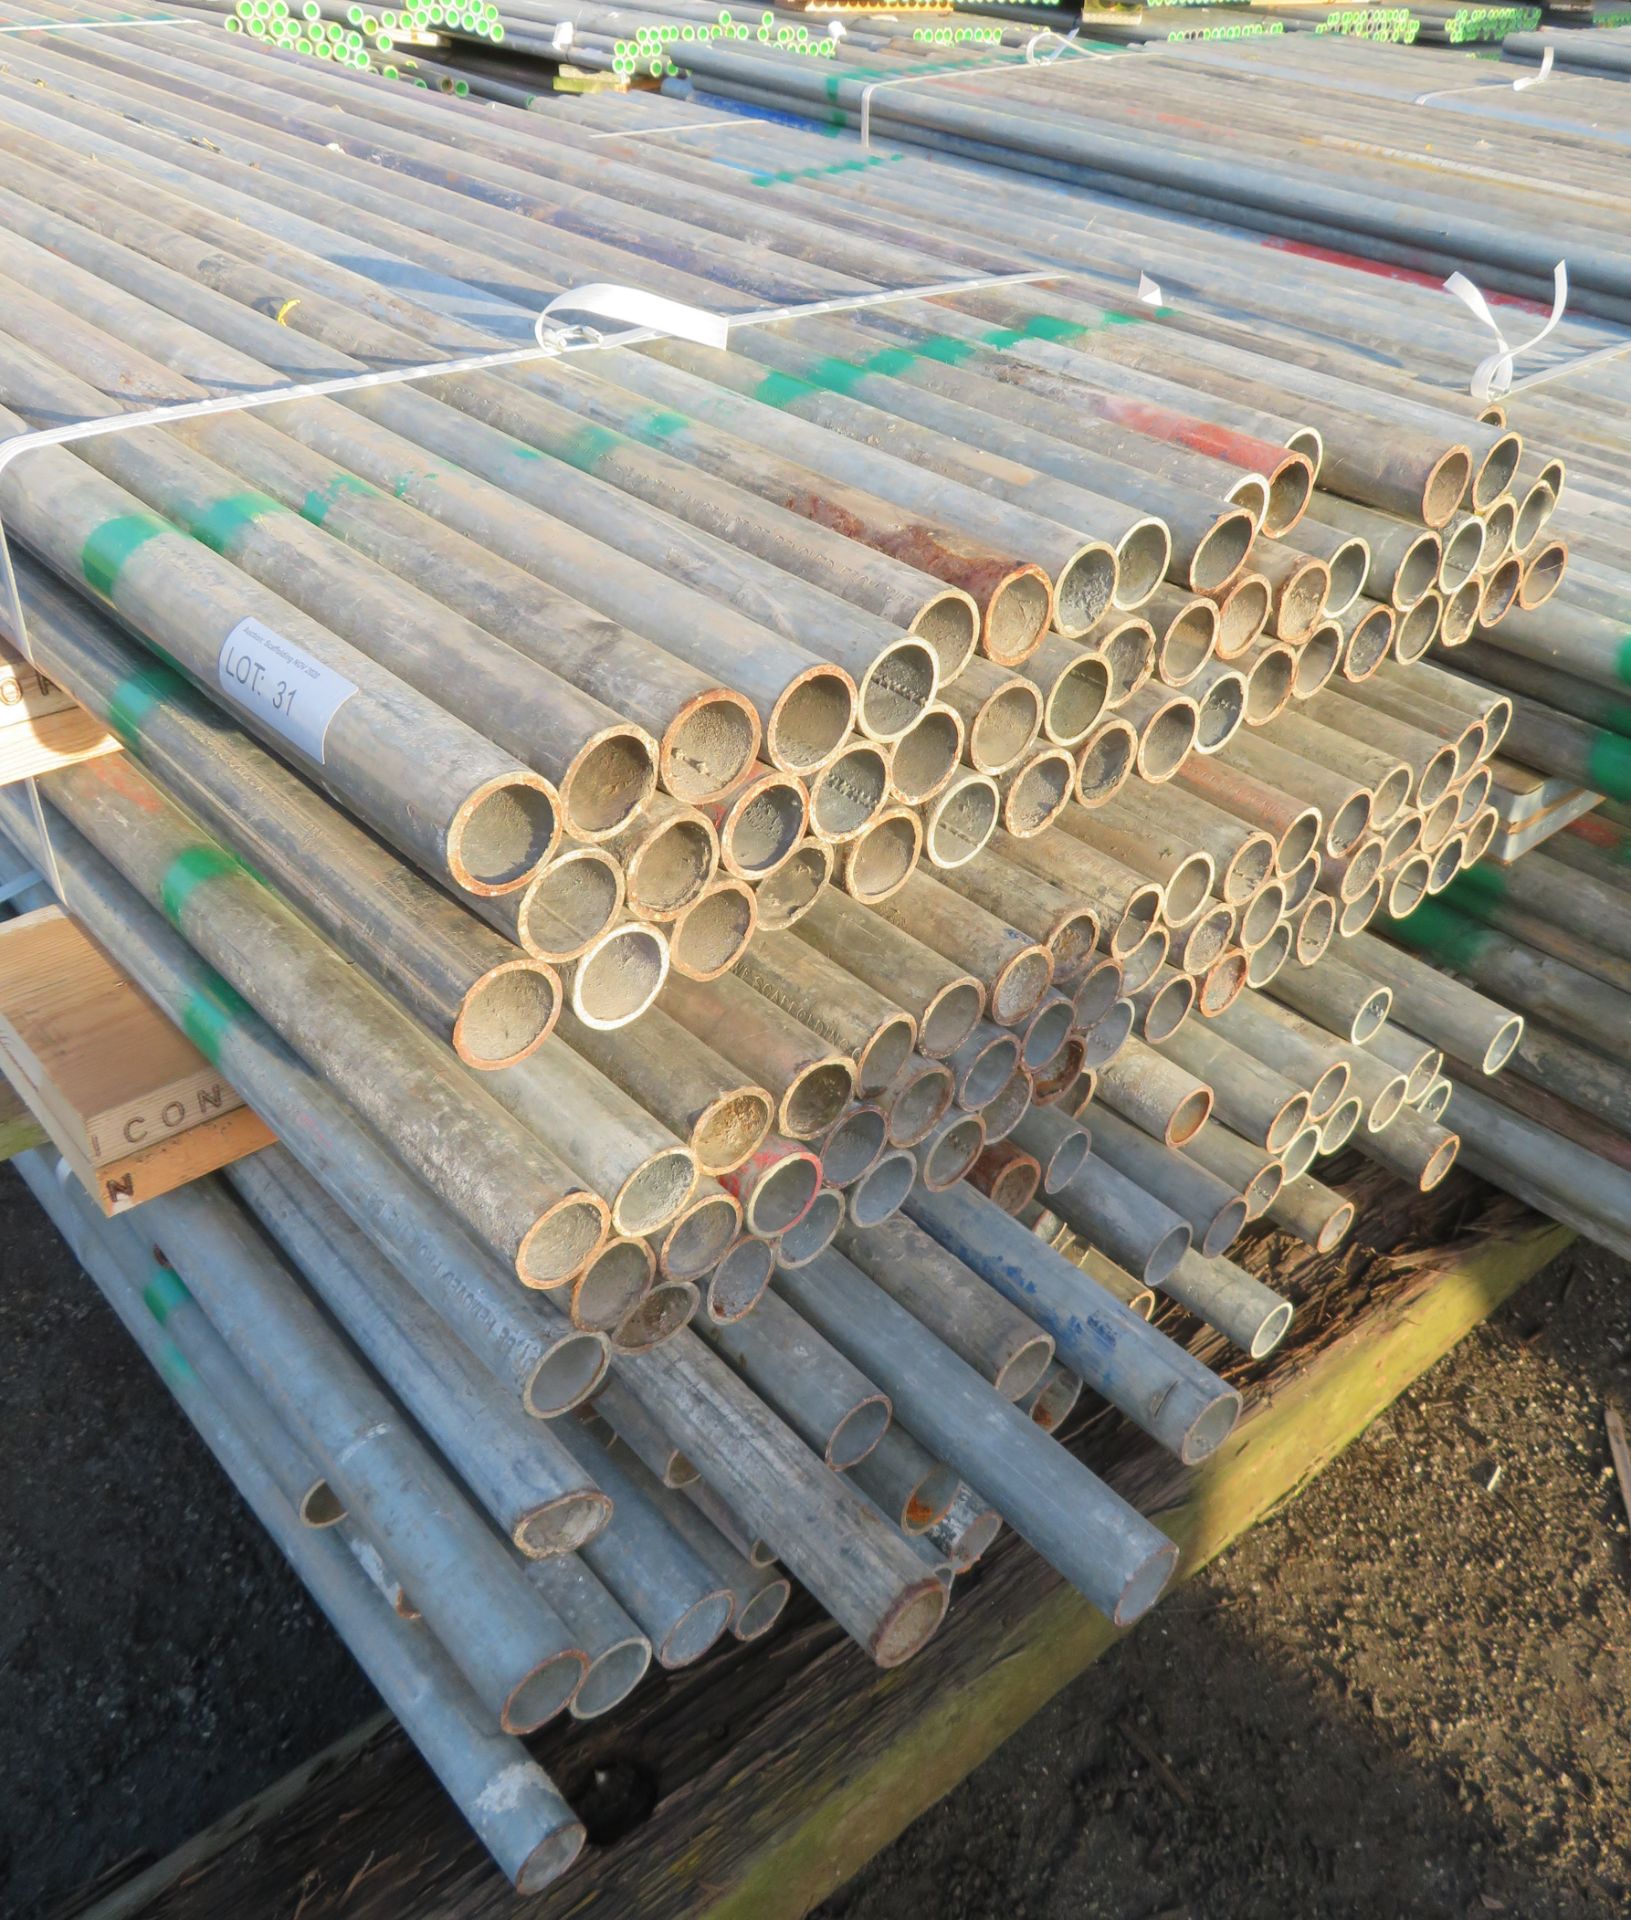 200x Various Length Galvanised Steel Scaffolding Poles. Lengths Range Between 8ft - 7.5ft. - Image 3 of 5